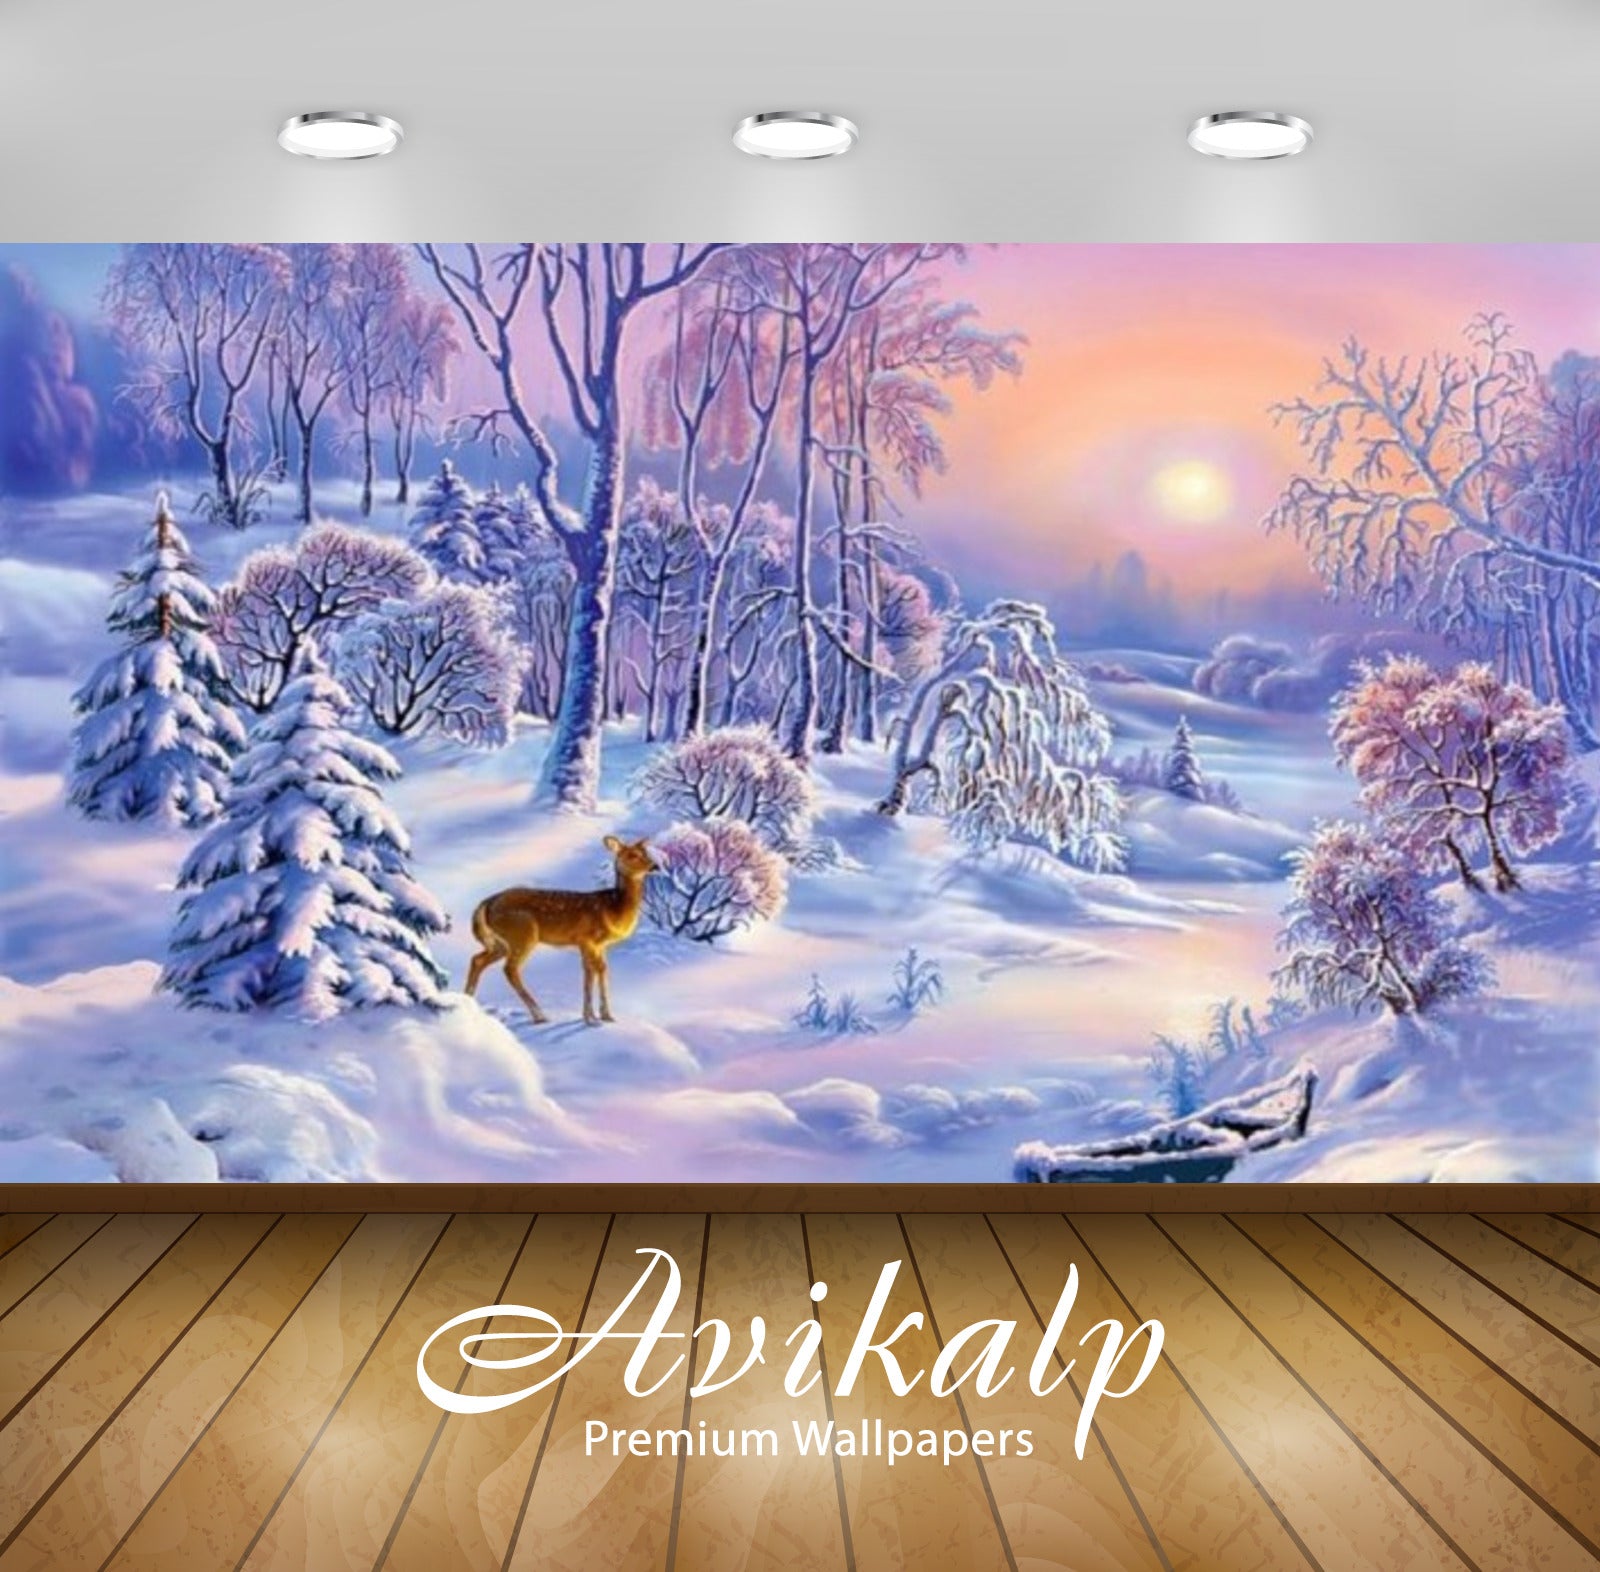 Avikalp Exclusive Awi2782 Landscape Winter Sun Boat Snow Trees Deer Art Full HD Wallpapers for Livin